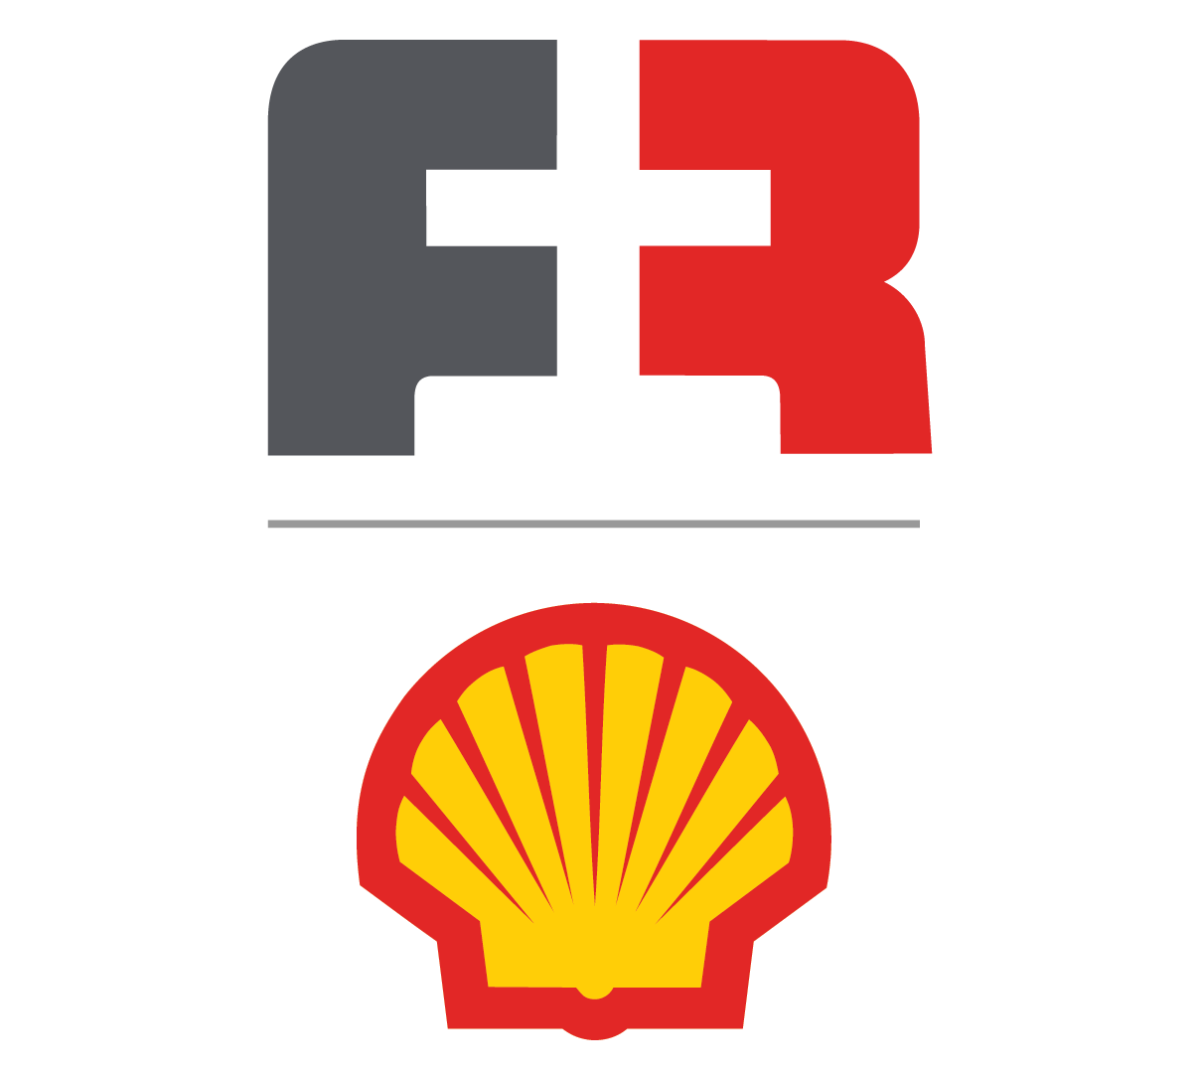 dx_Shell_fuelrewards